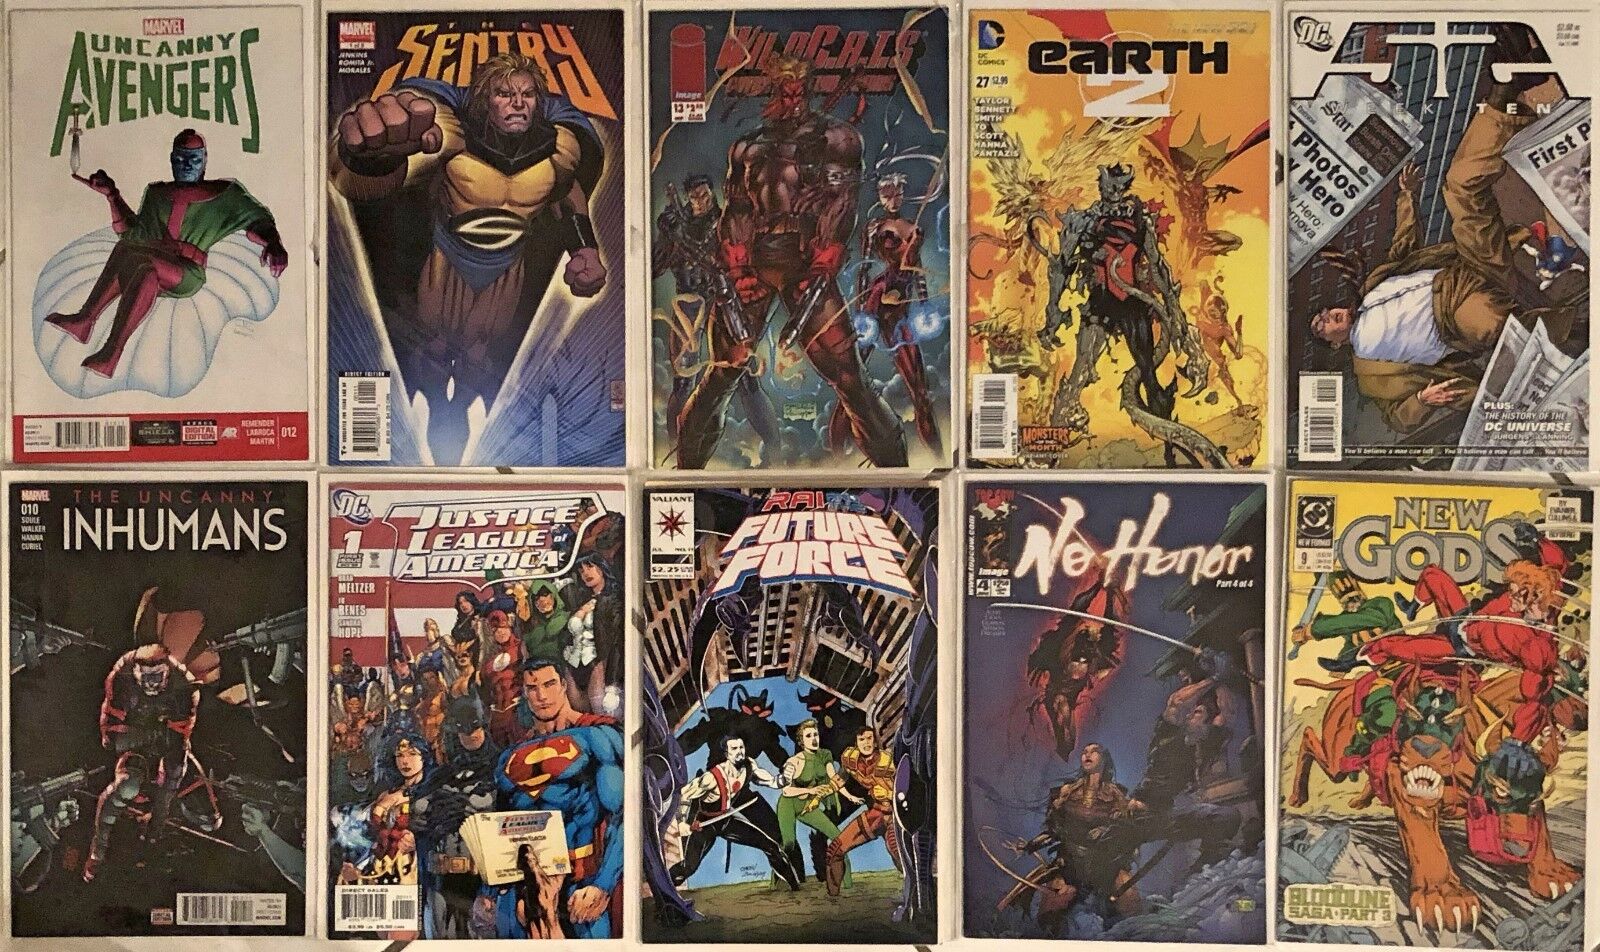 10 Comic Books Inhumans Sentry Justice League Rai New Gods 52 Avengers and more